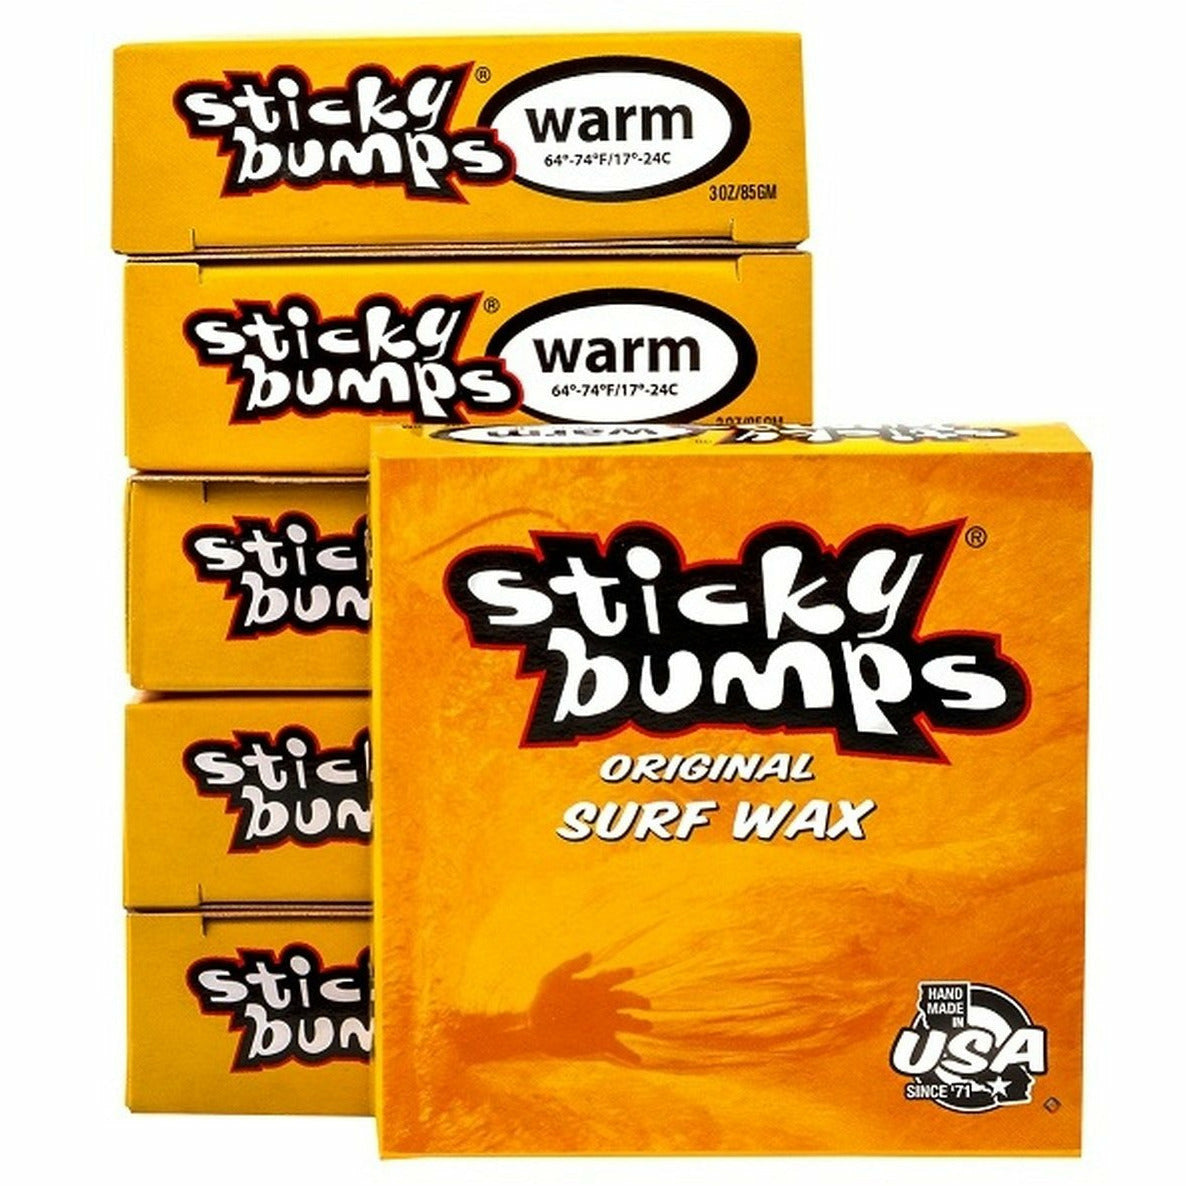 Sticky Bumps - Original Surf Wax (5 pack)